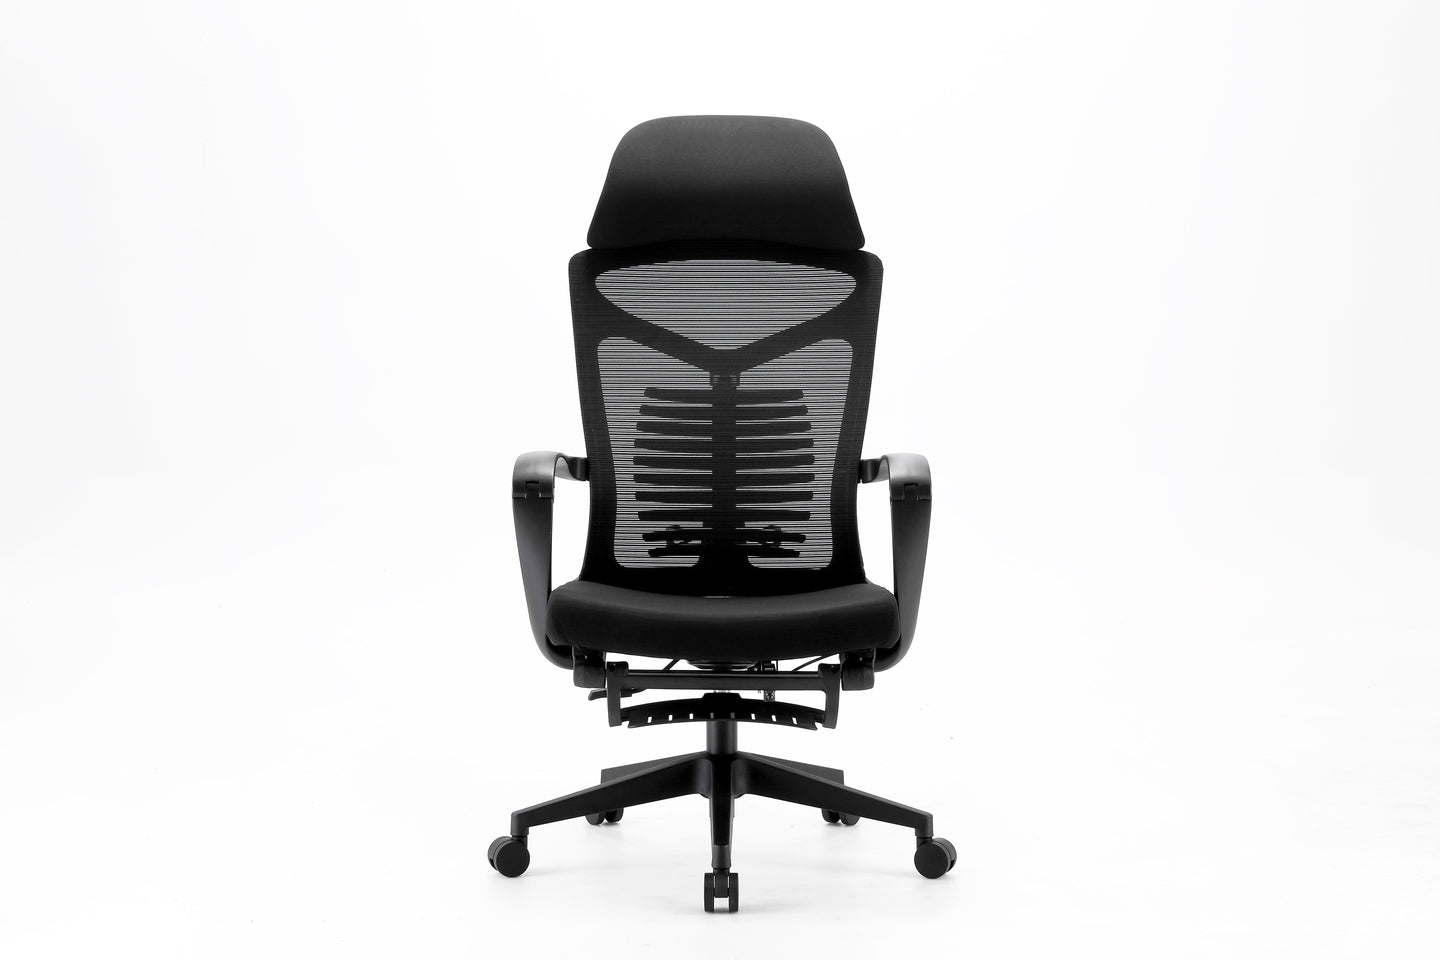 SIHOO M81 Ergonomics Office Chair